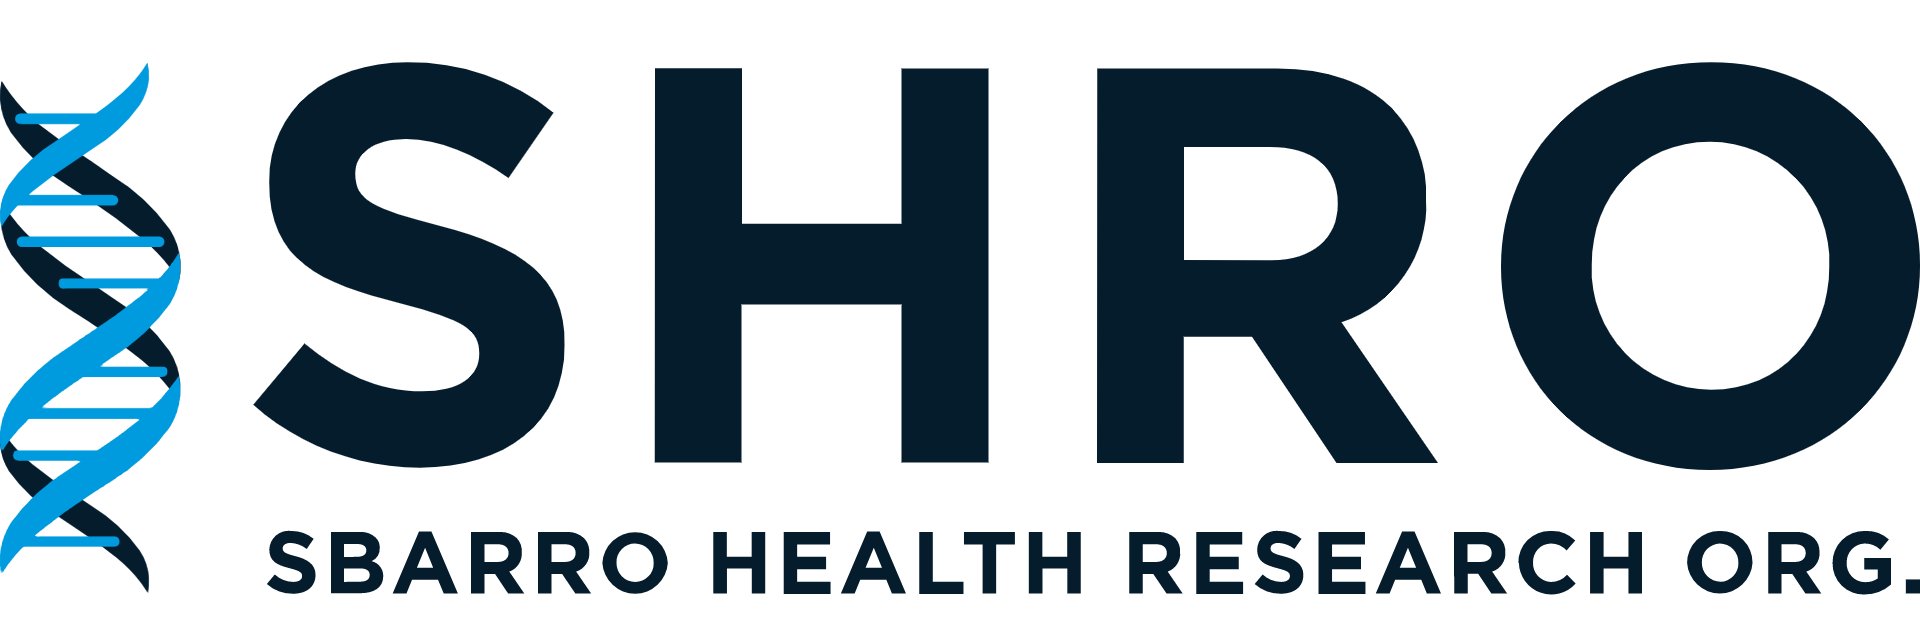 Sbarro Health Research Organization